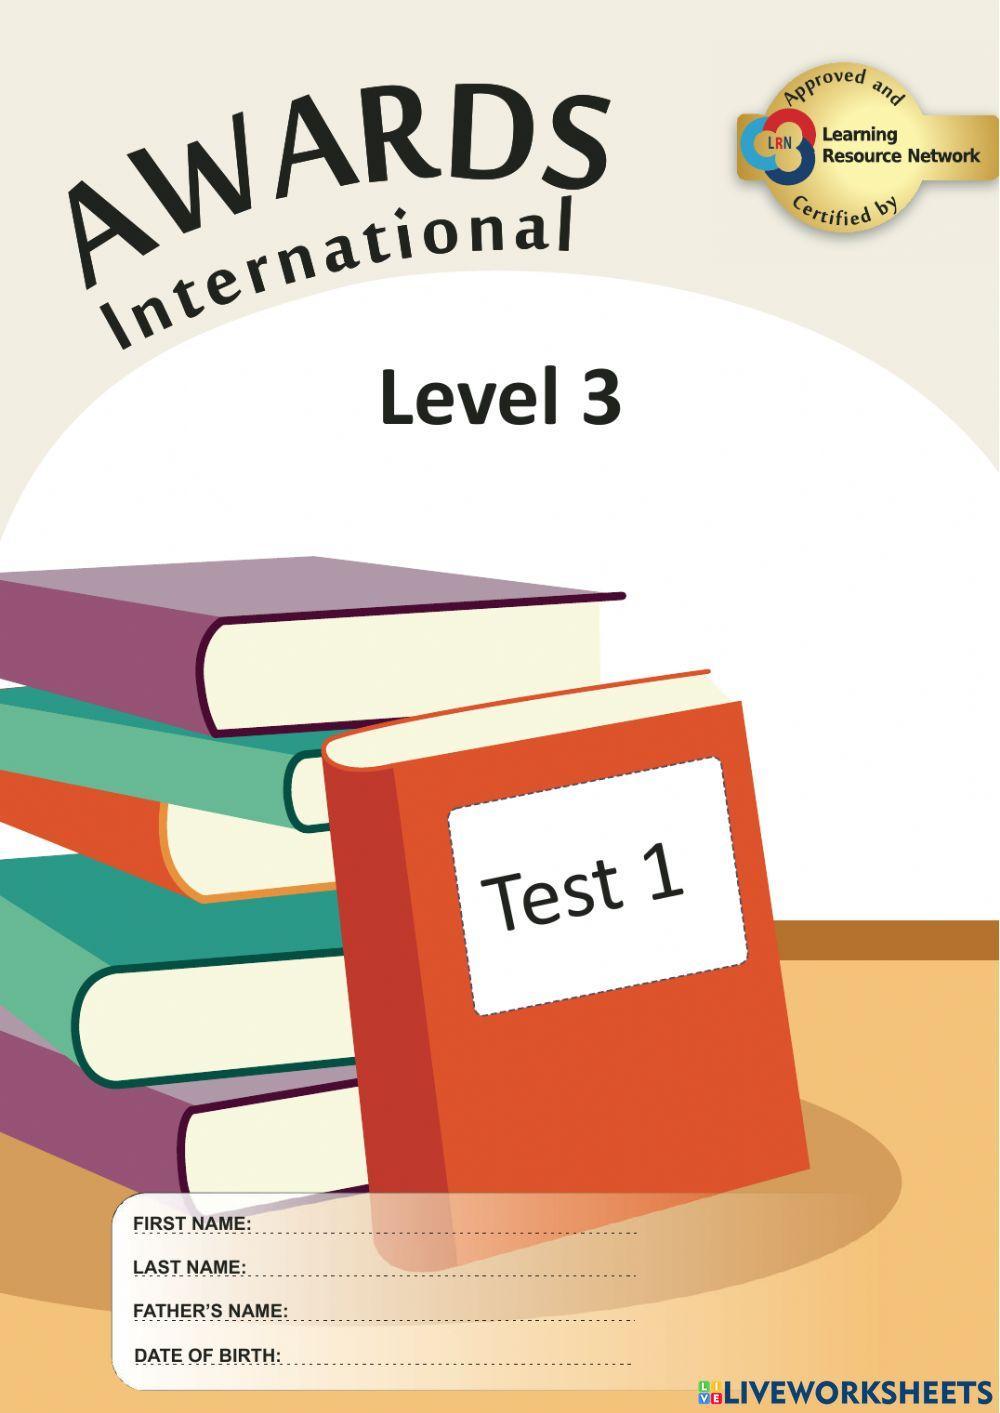 TEST 1 AWARDS INTERNATIONAL LEVEL 3